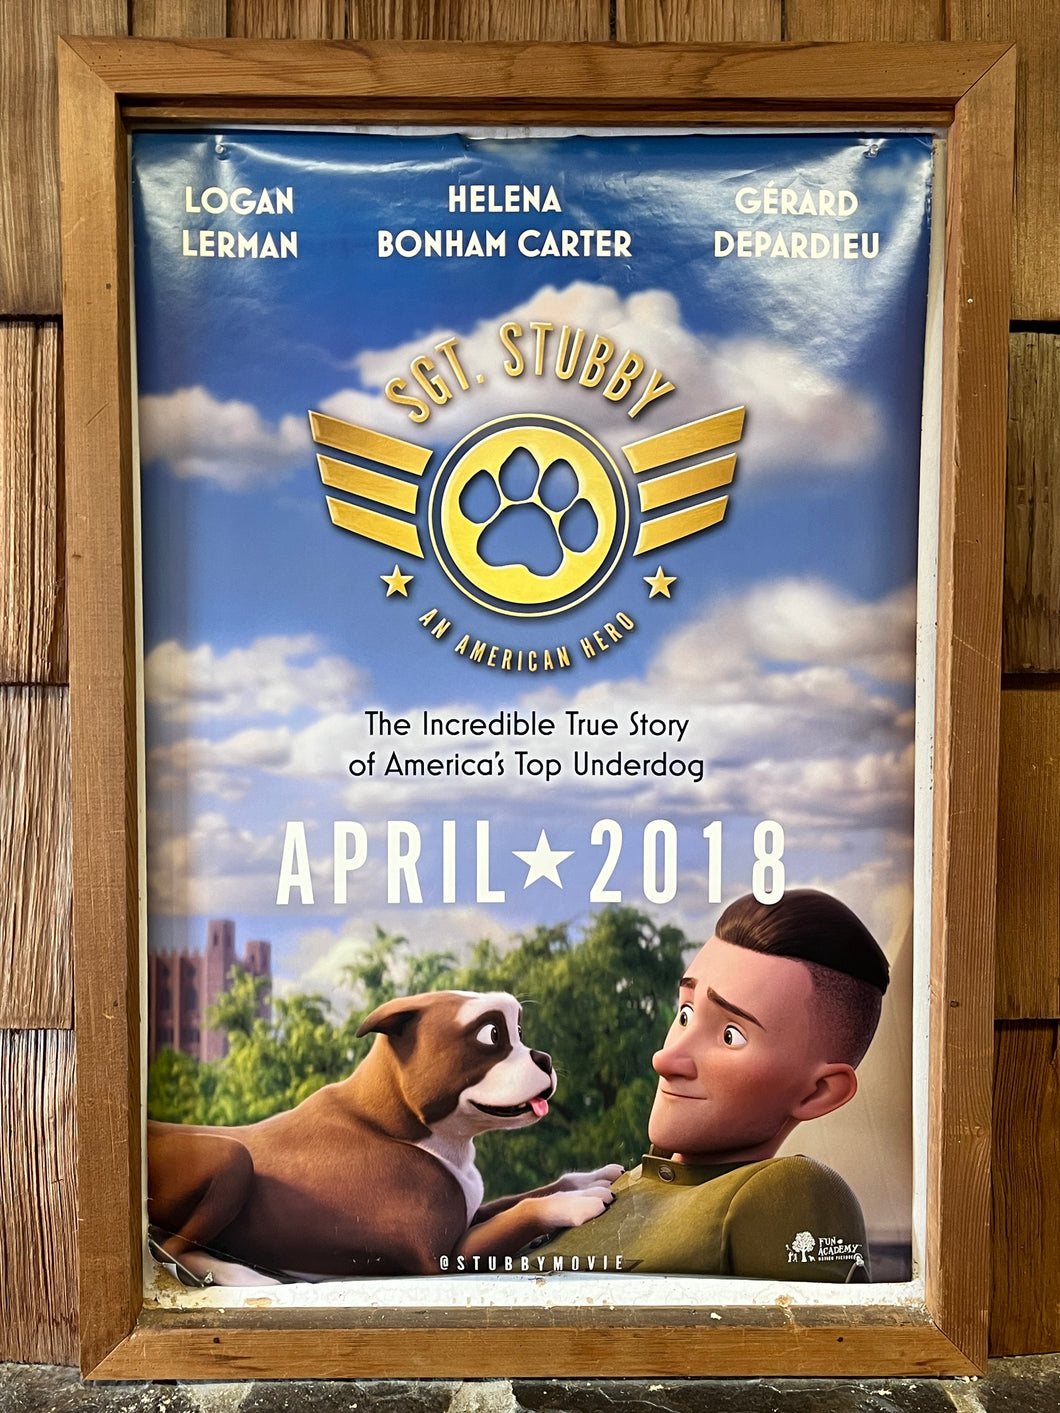 Sgt. Stubby: An American Hero (2018)